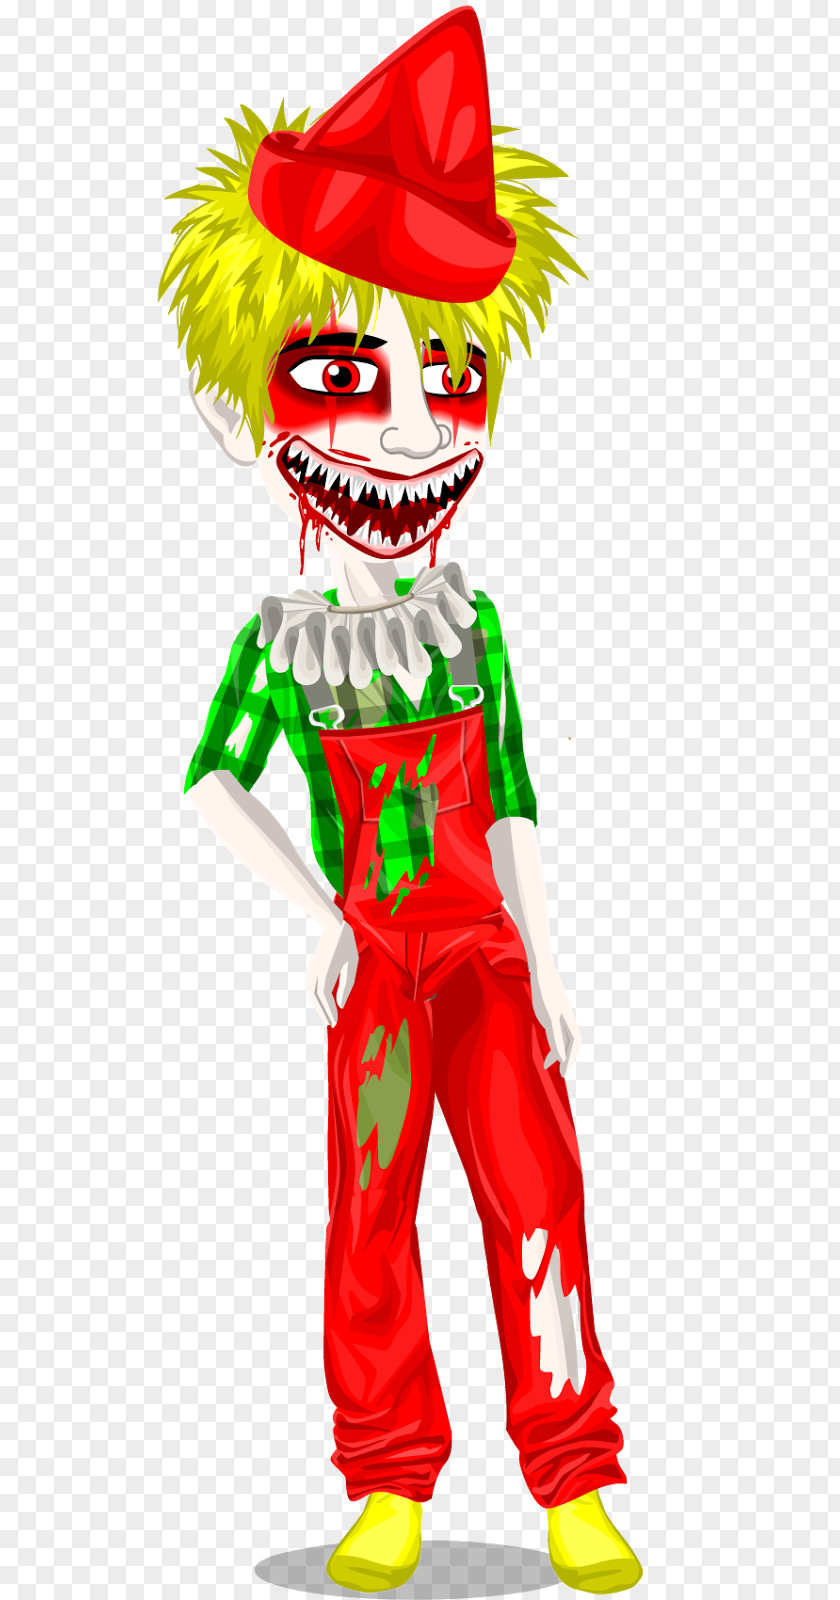 Msp Clown Cartoon Costume Mascot Character PNG